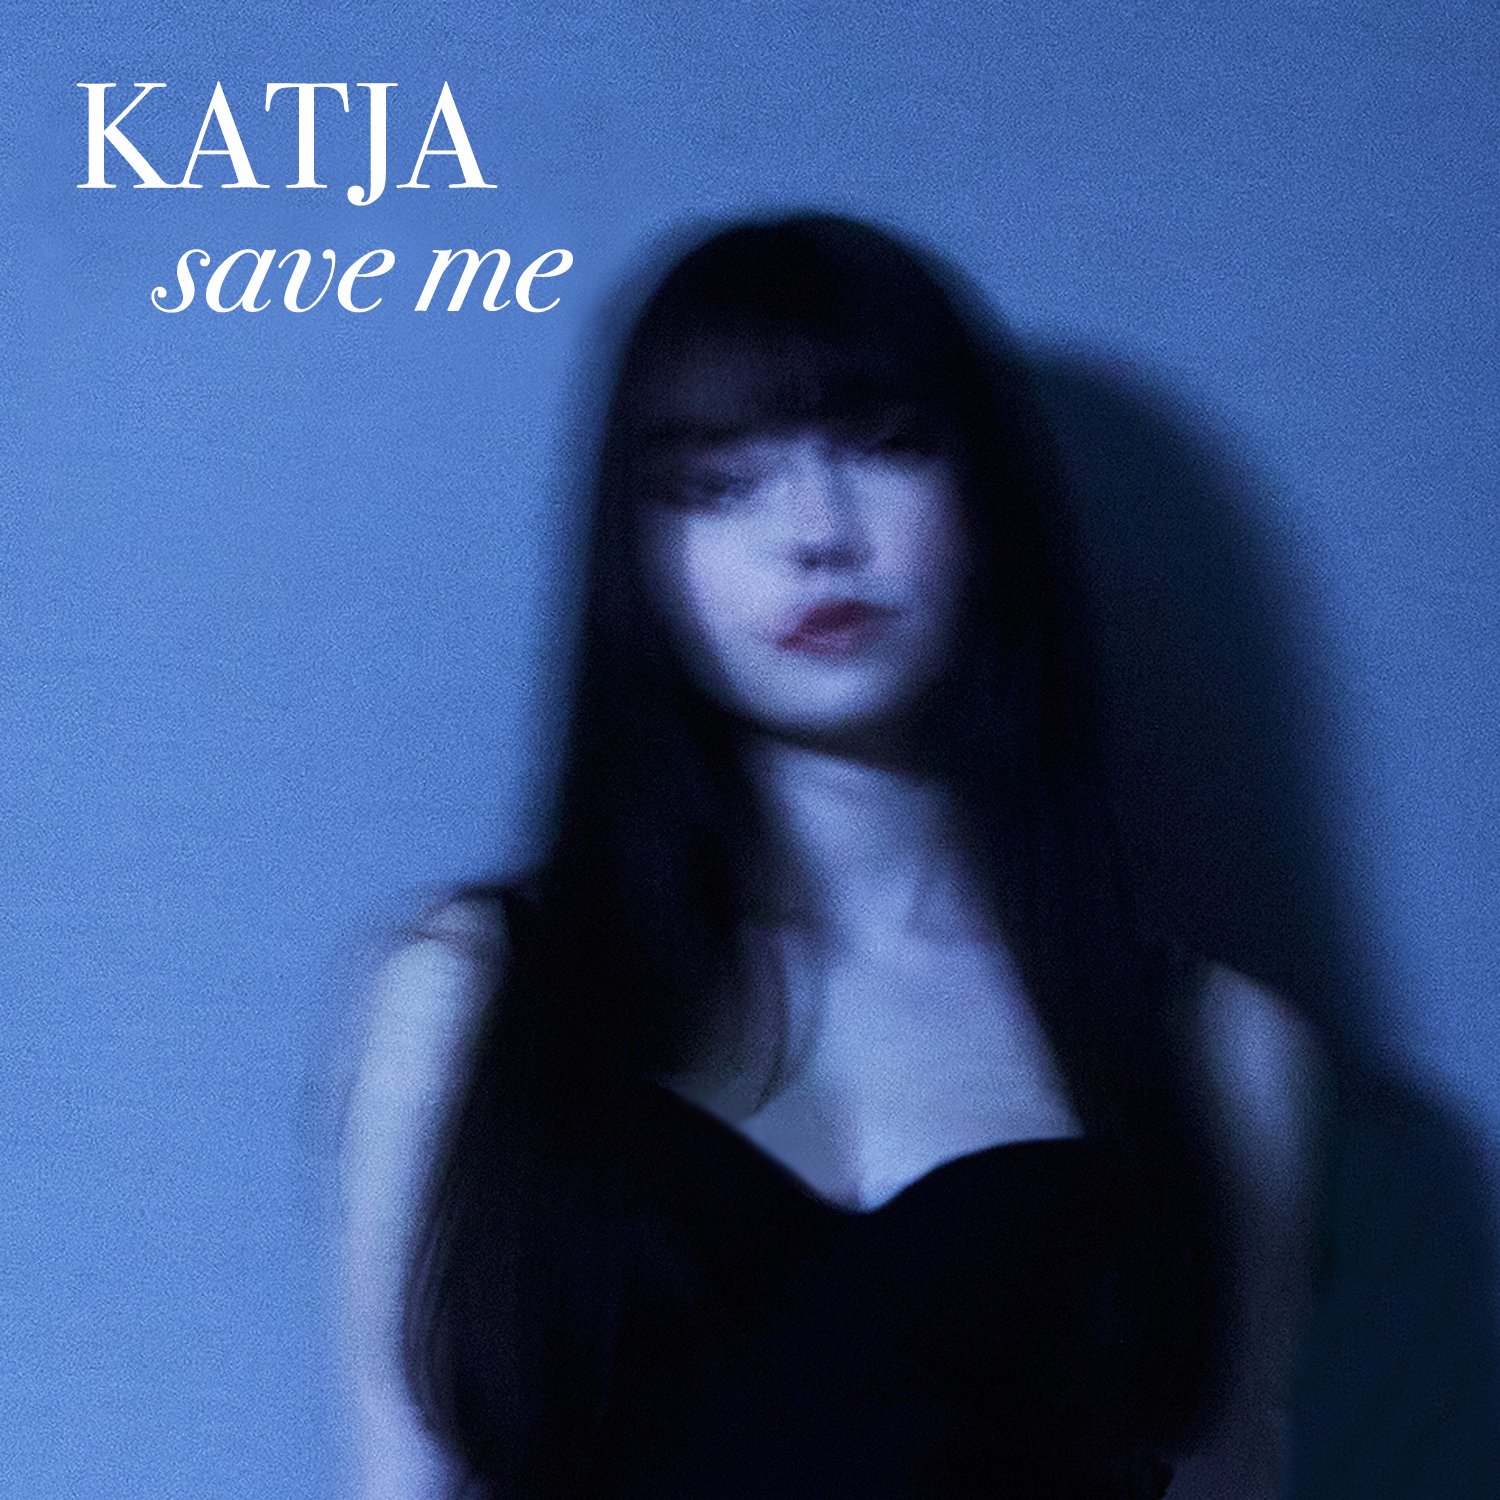 Katja SAVE ME cover art.jpeg